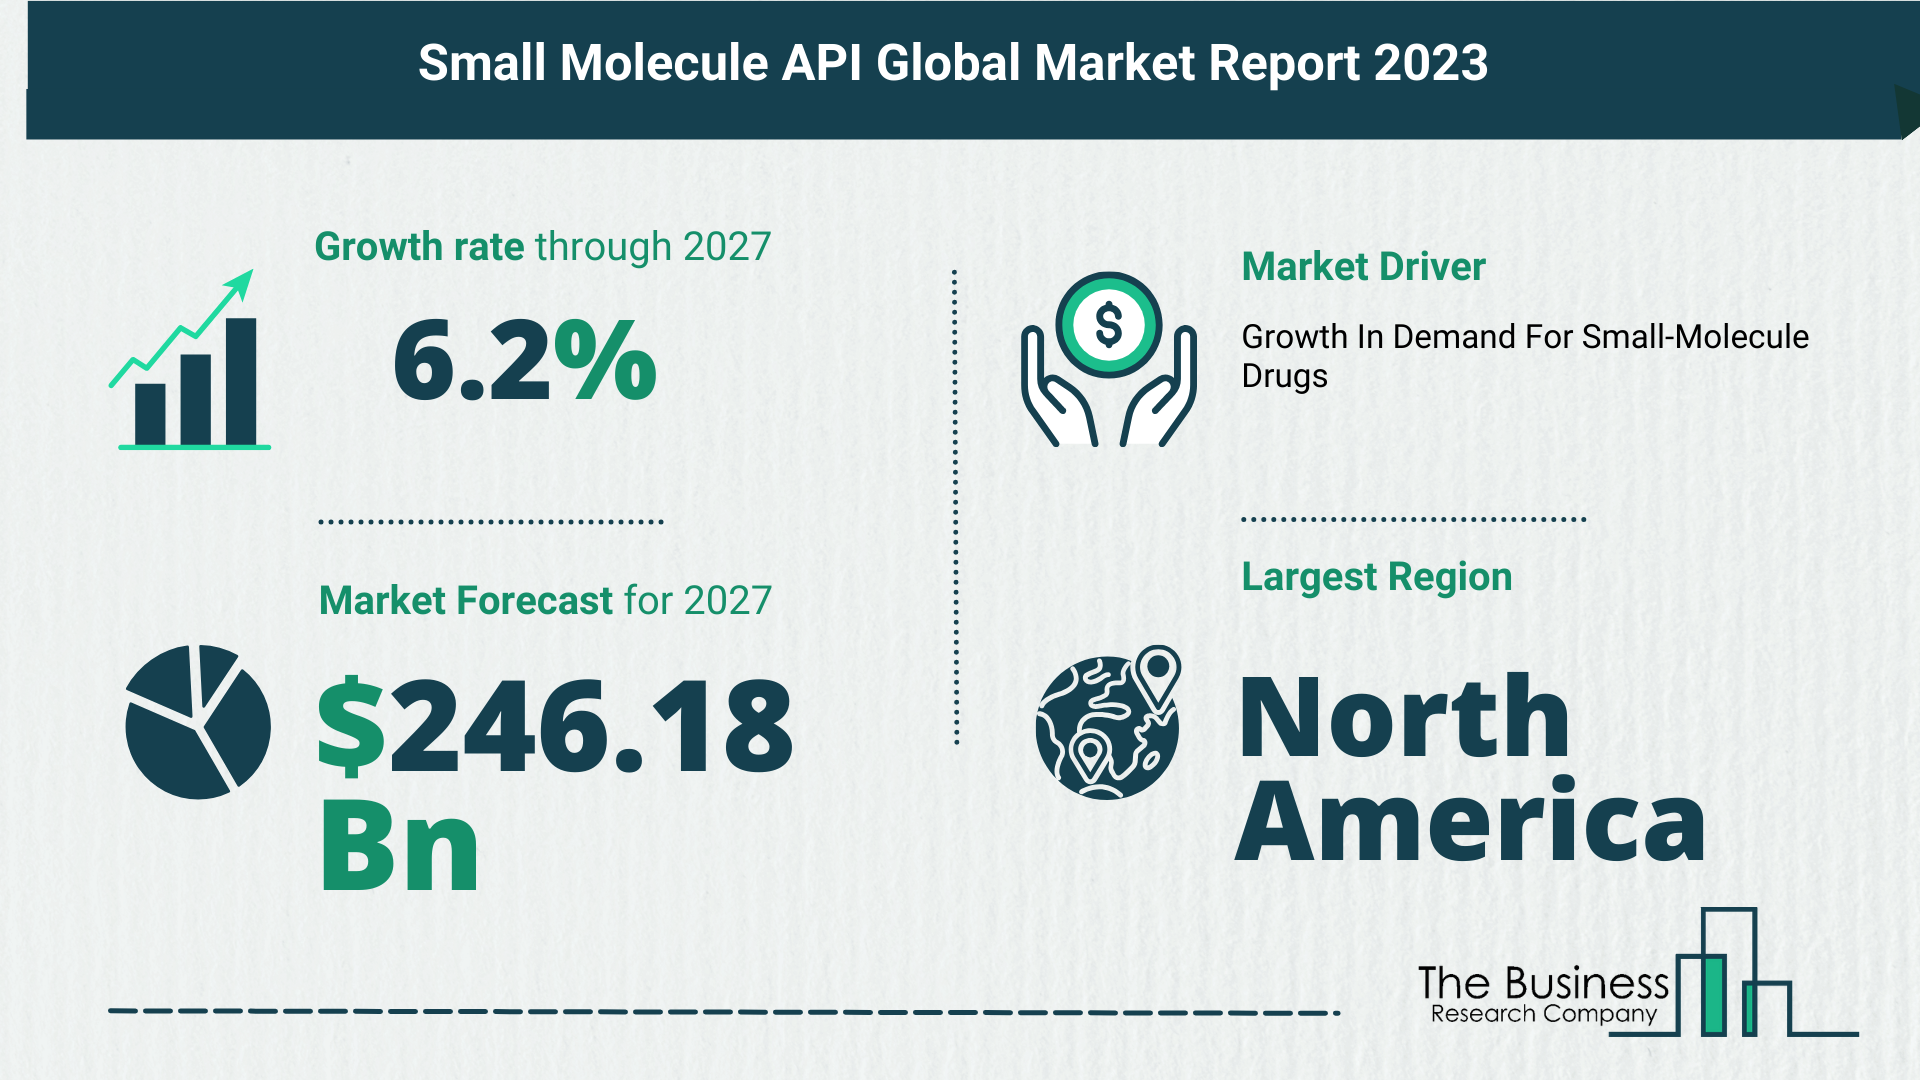 Global Small Molecule API Market